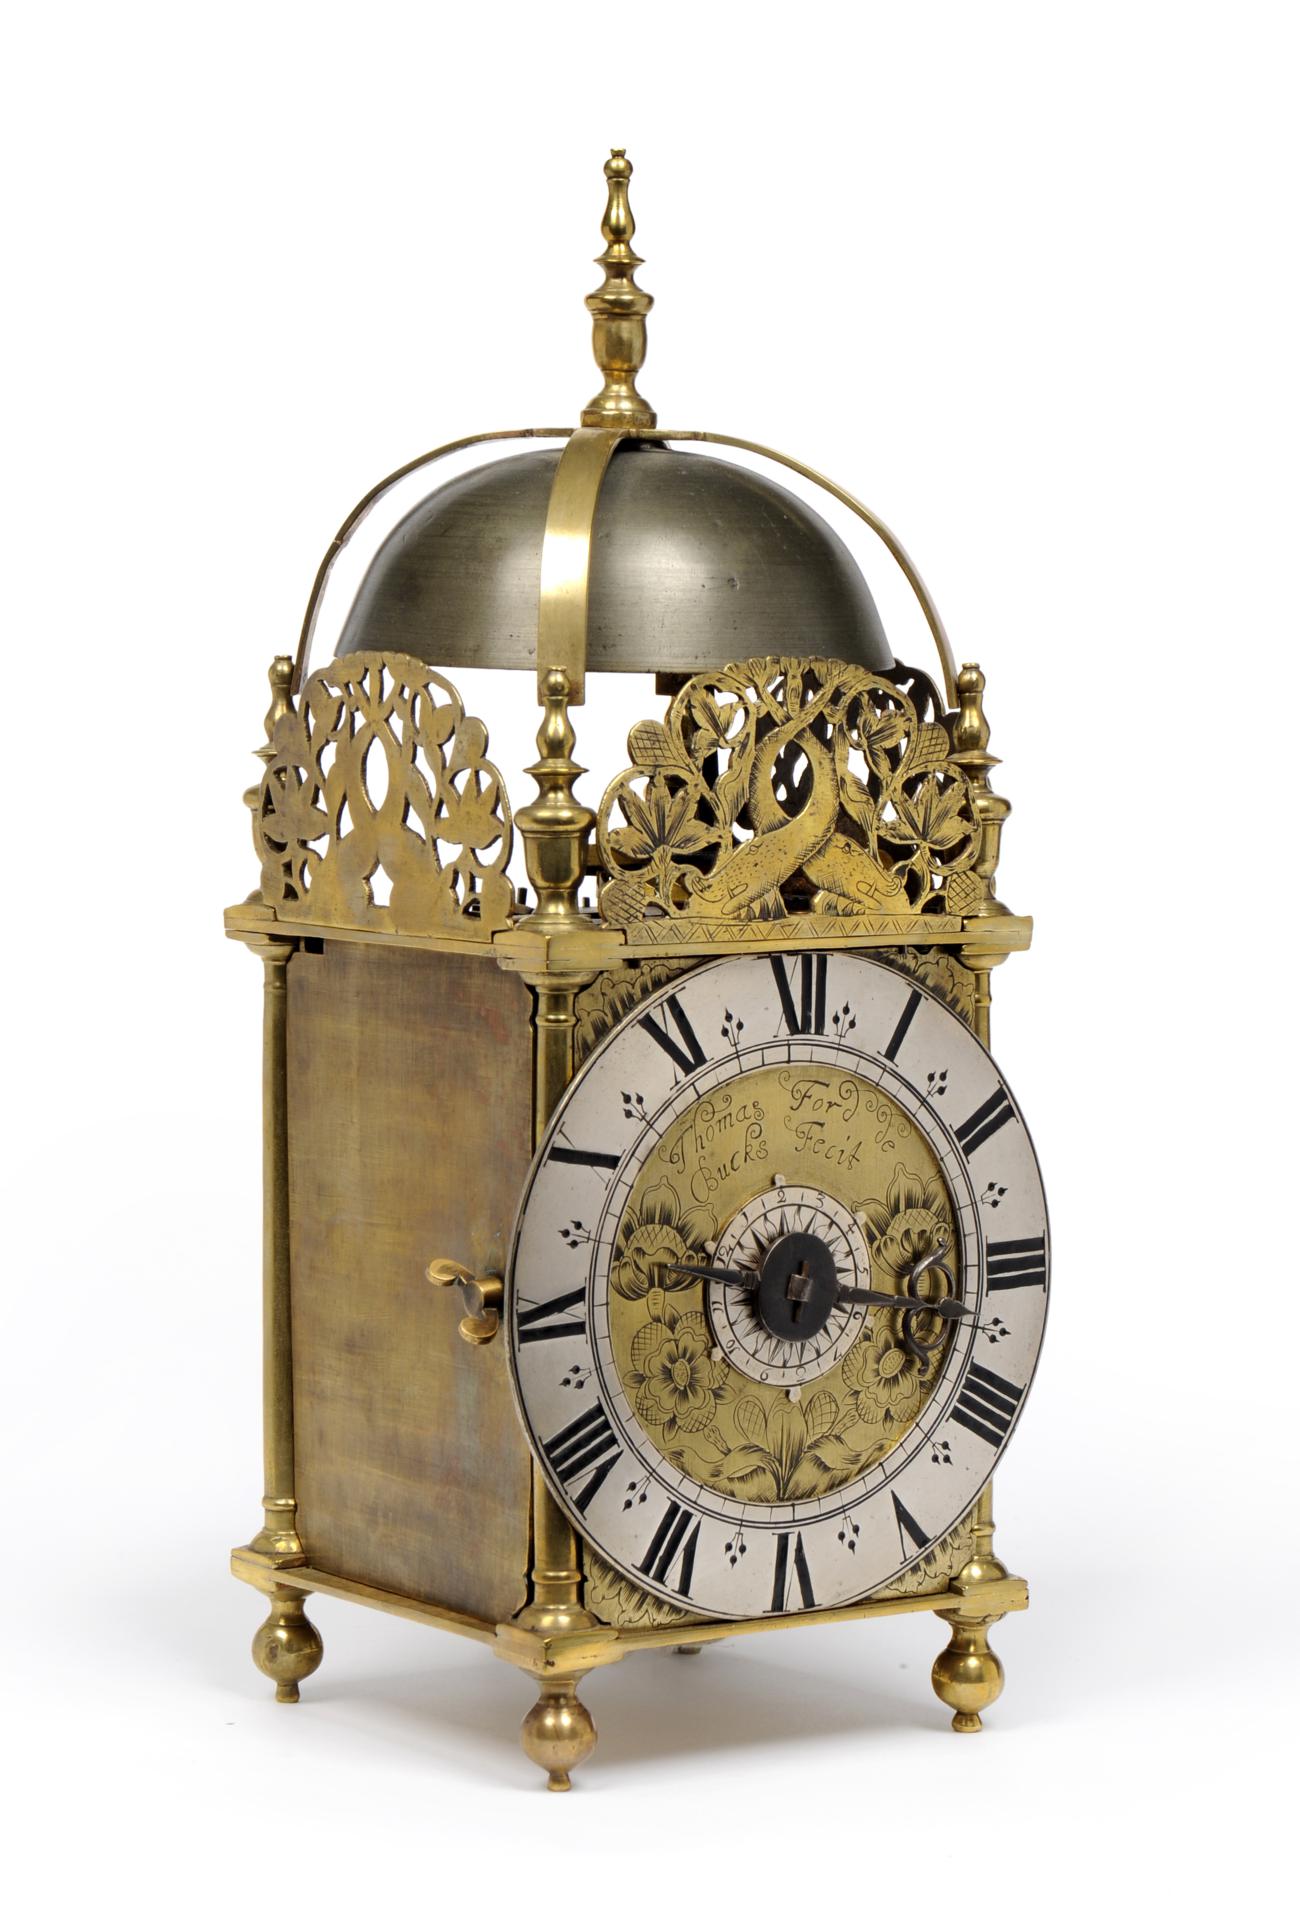 A Fine and Rare Brass Striking Lantern Clock, signed Thomas Ford, Bucks, Fecit, late 17th century,